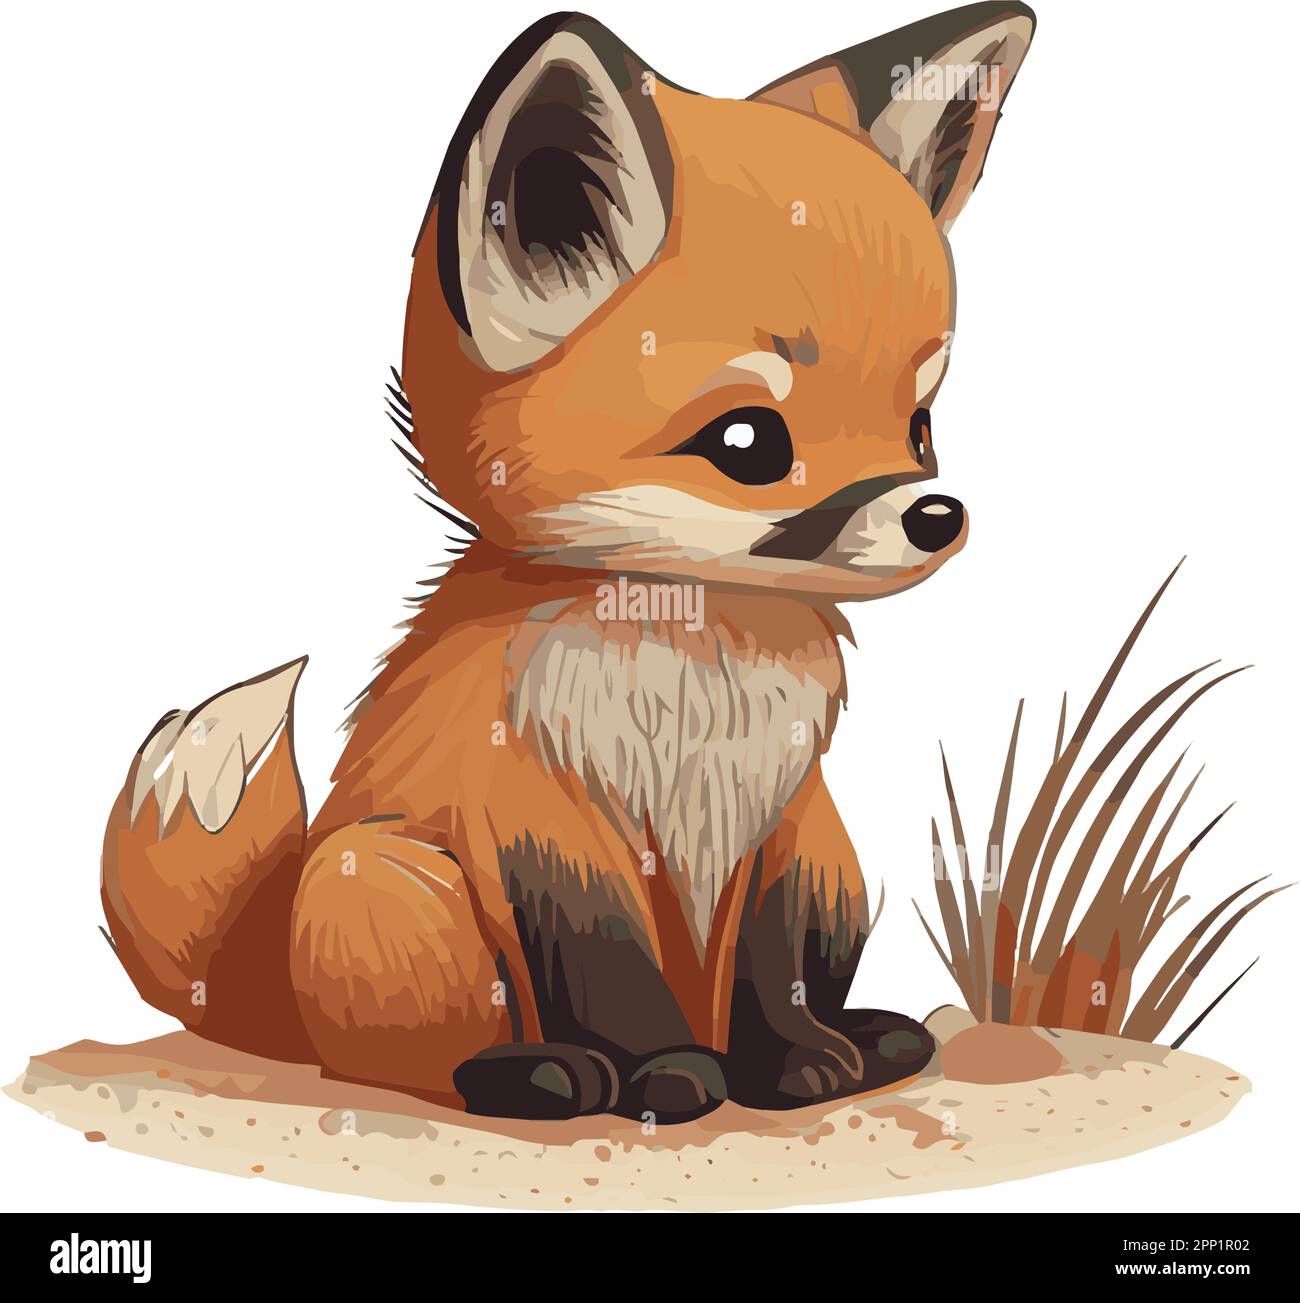 How to draw a cute little cartoon fox » Easy-To-Draw.com